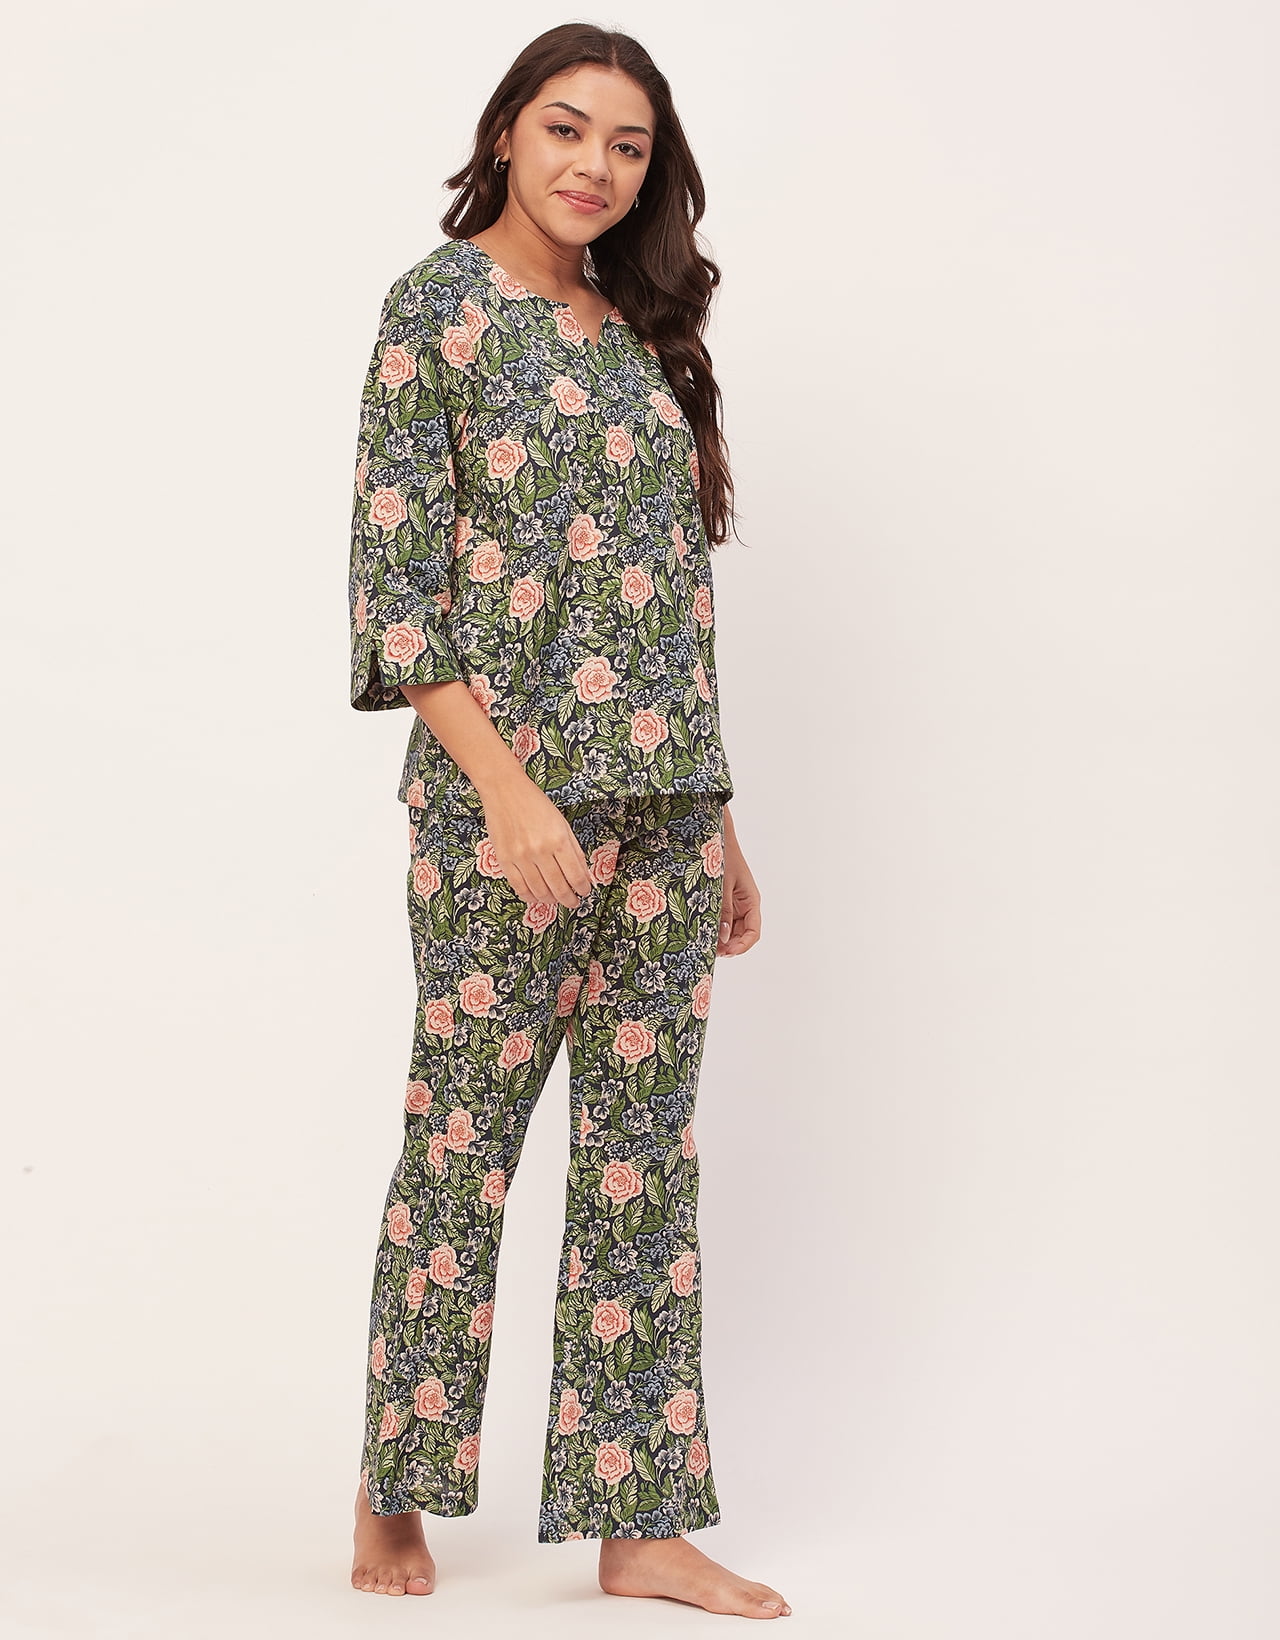 Buy Trending Leopard/Tiger Print Night Suits Shirt & Pyjama Set for Women  X-Large (Medium, Leopard Short) at Amazon.in